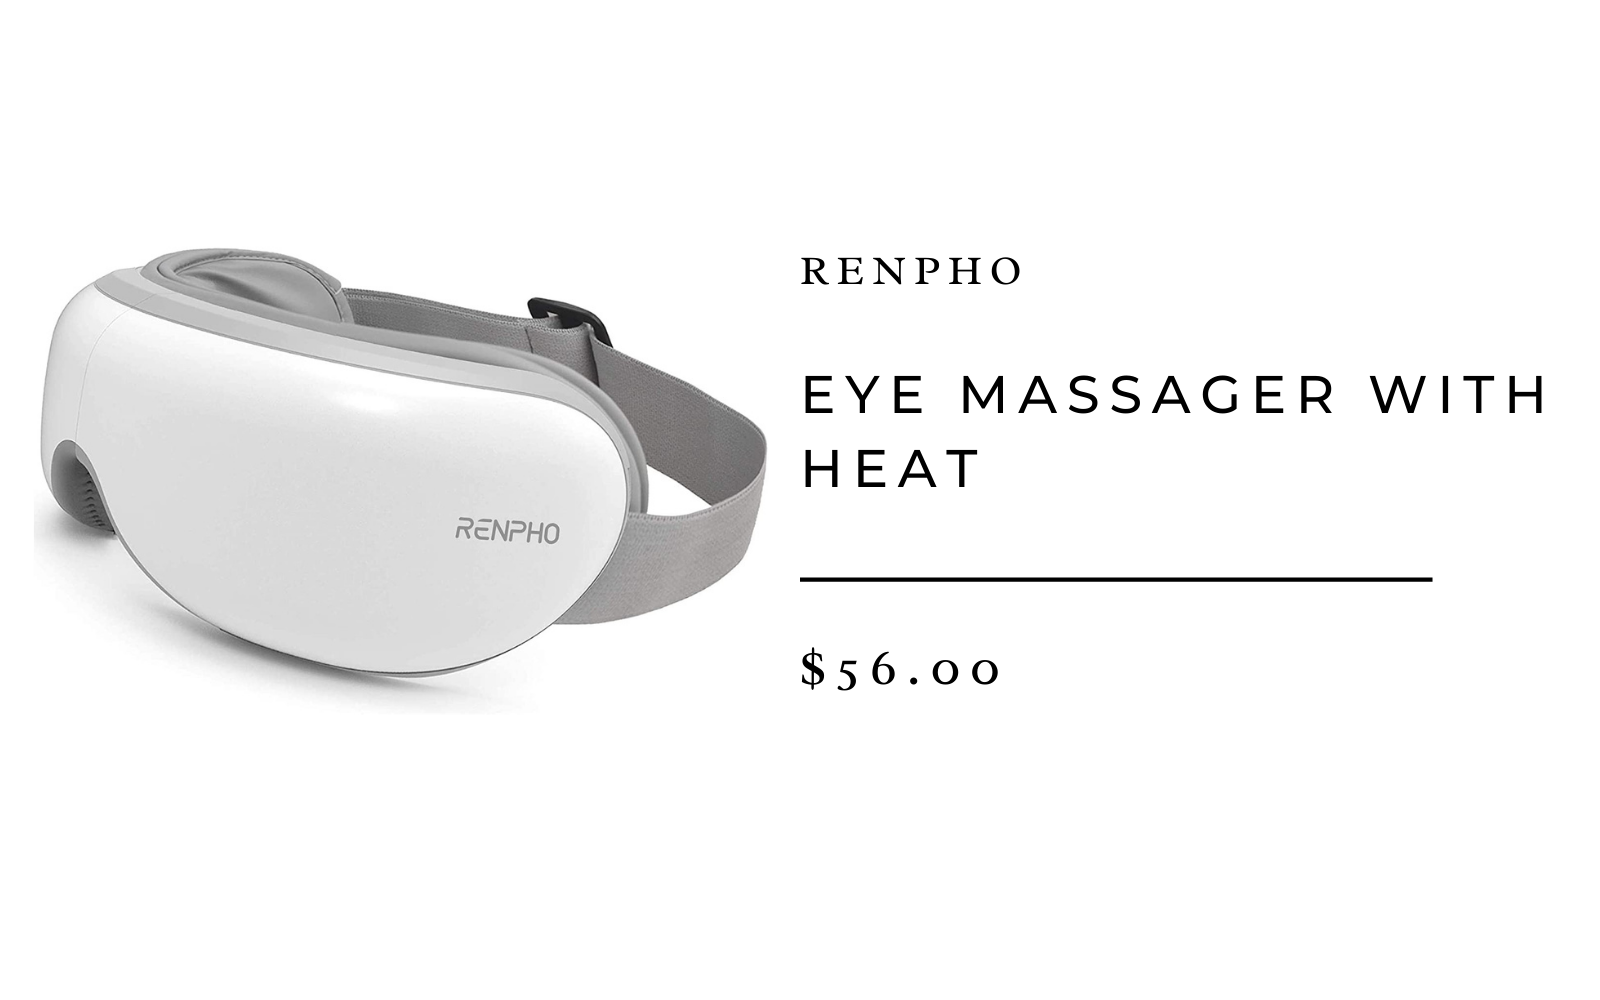 RENPHO Eye Massager With Heat